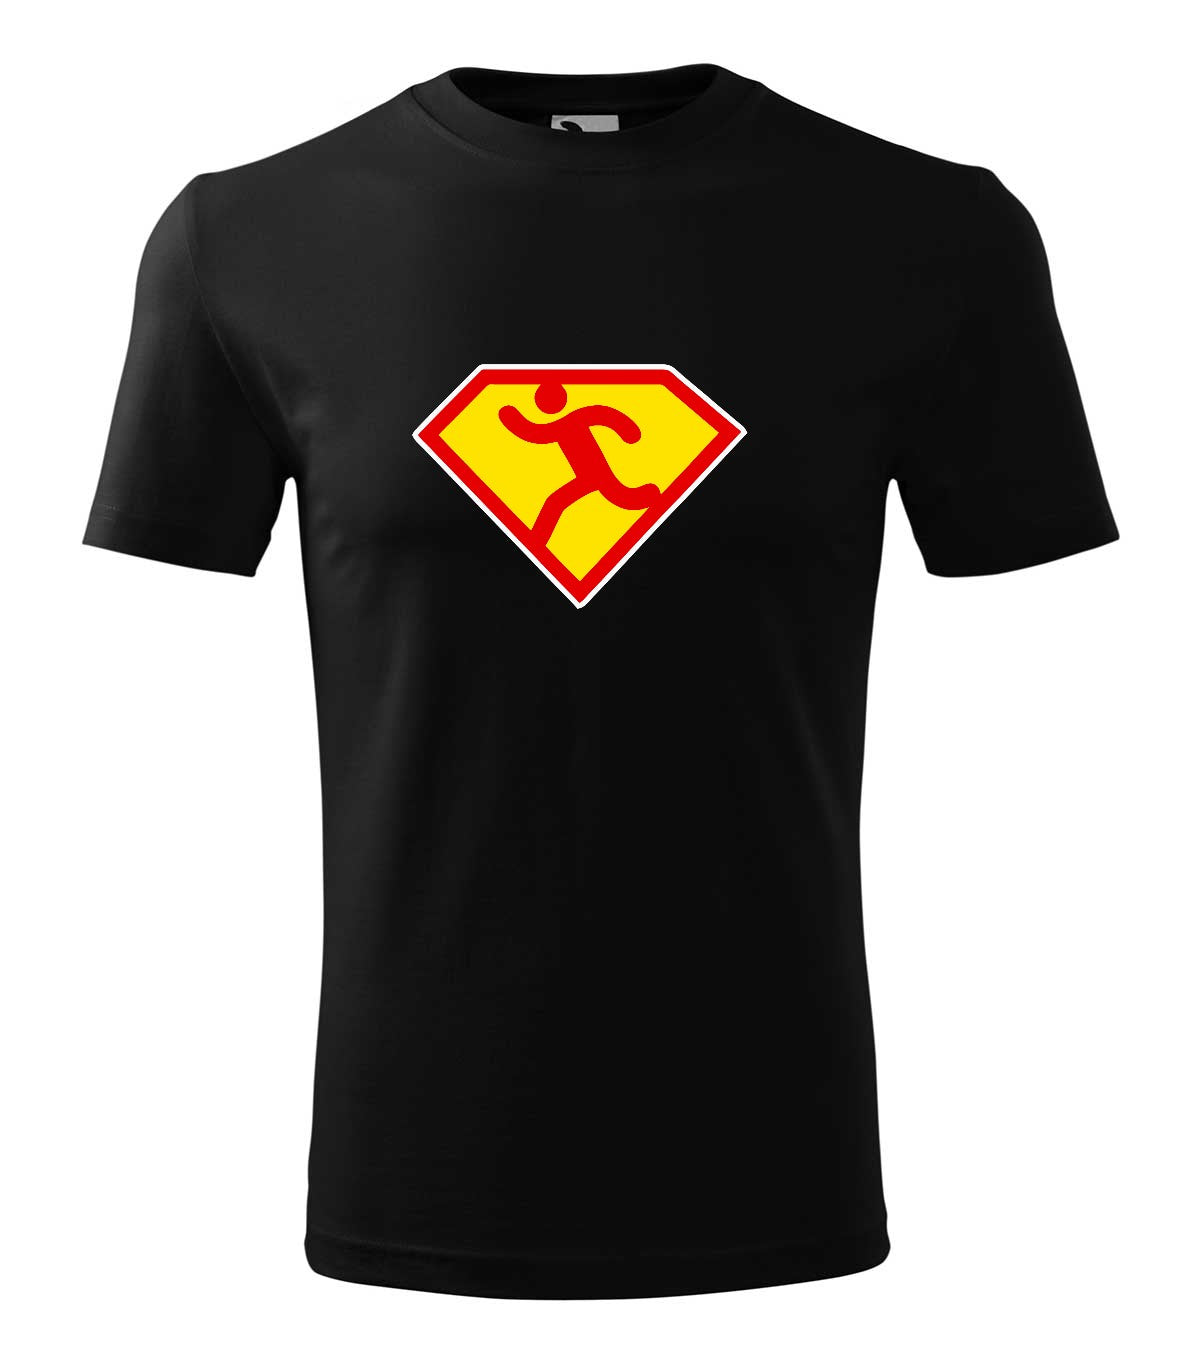 Superrunner férfi technikai póló